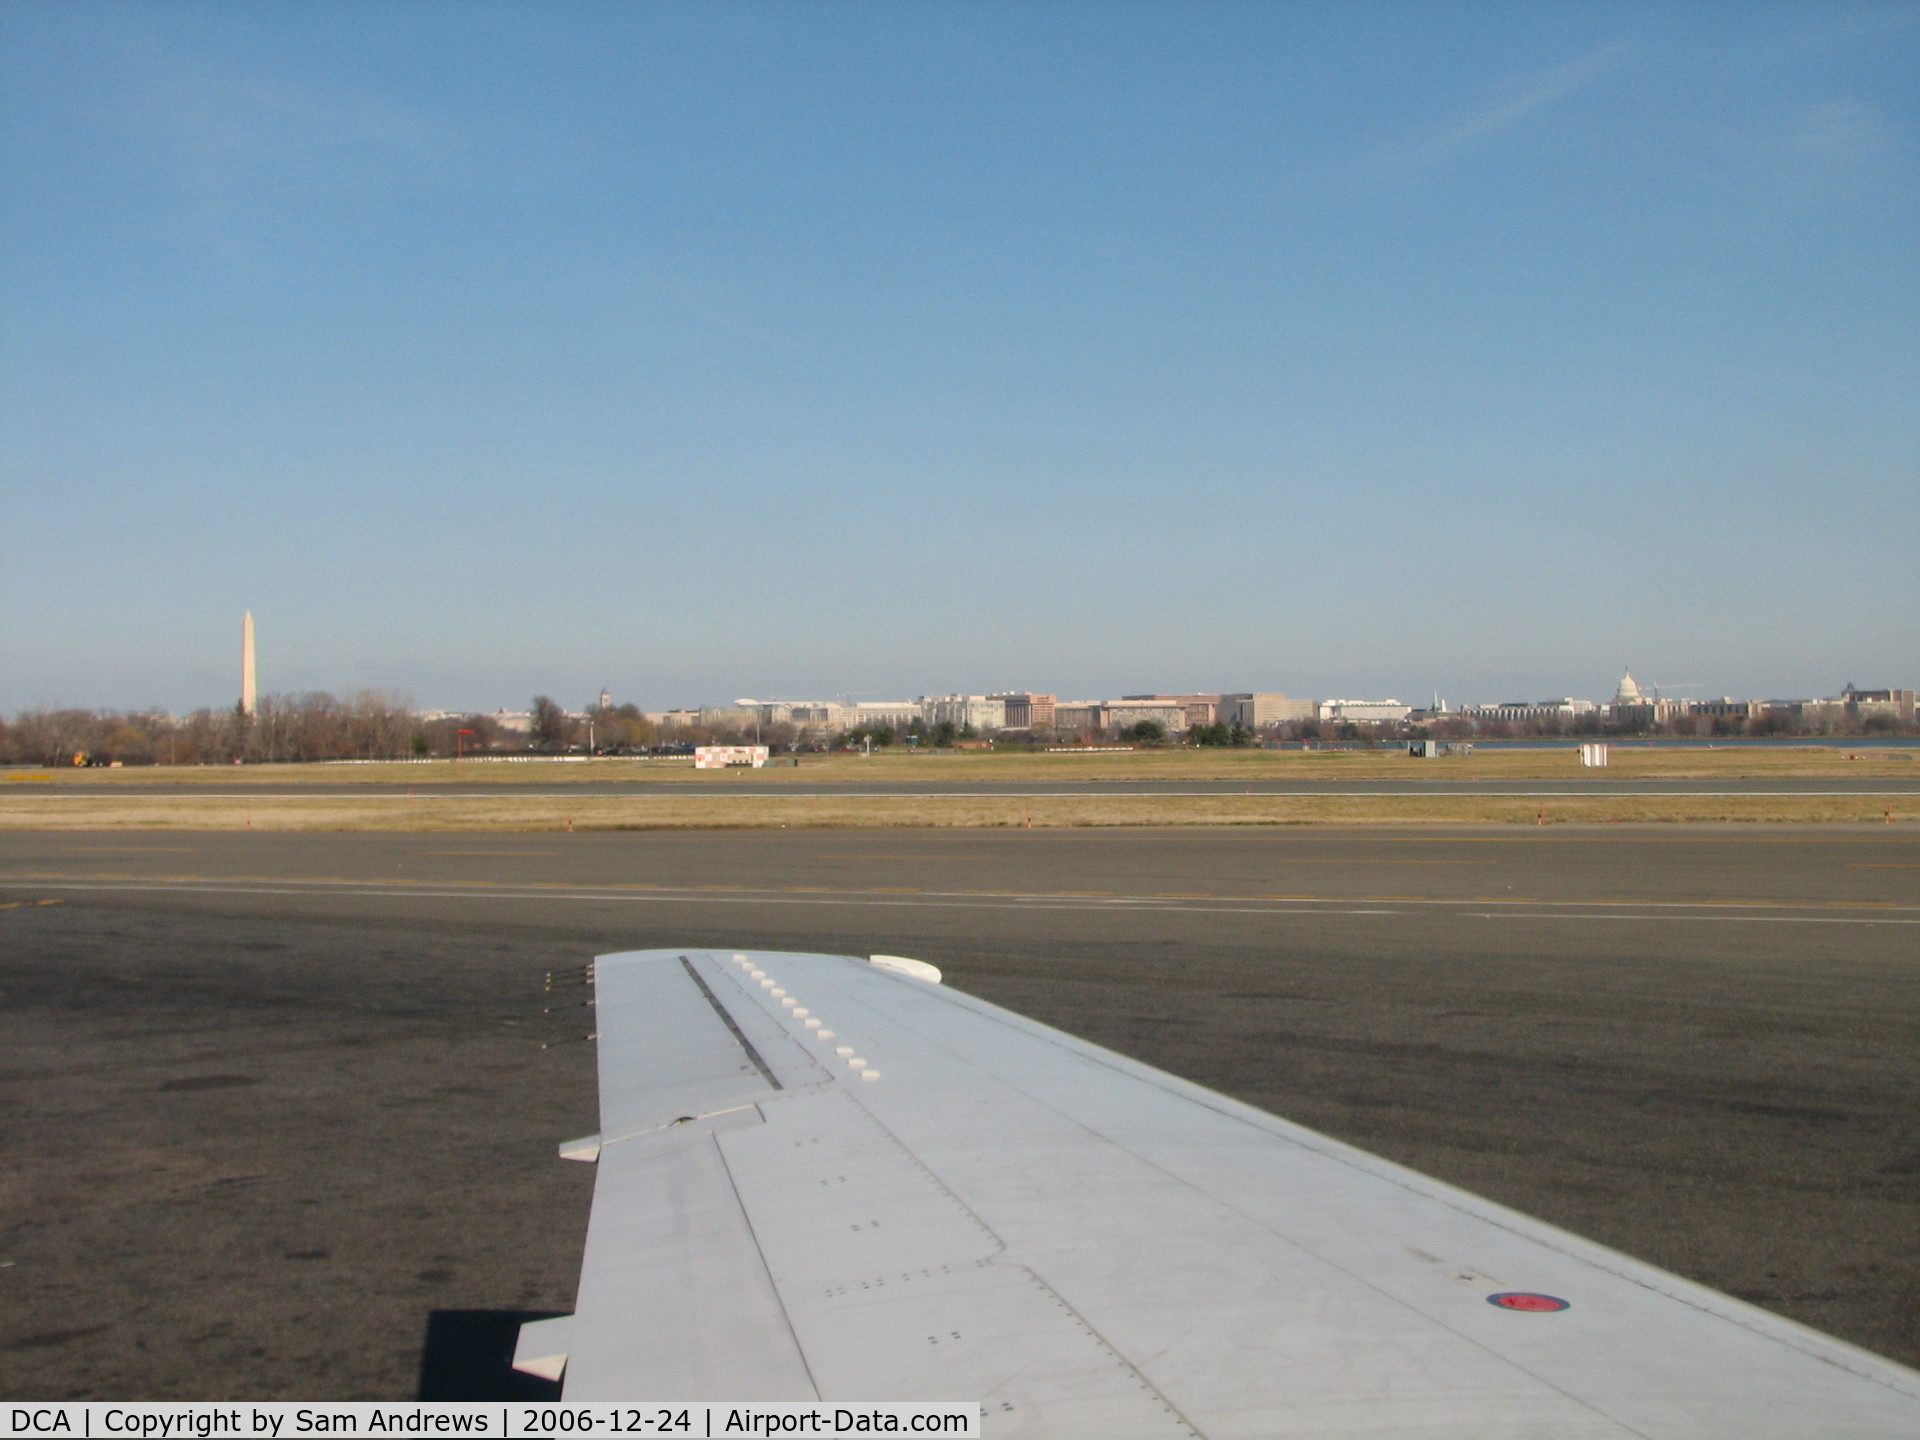 Ronald Reagan Washington National Airport (DCA) - The view